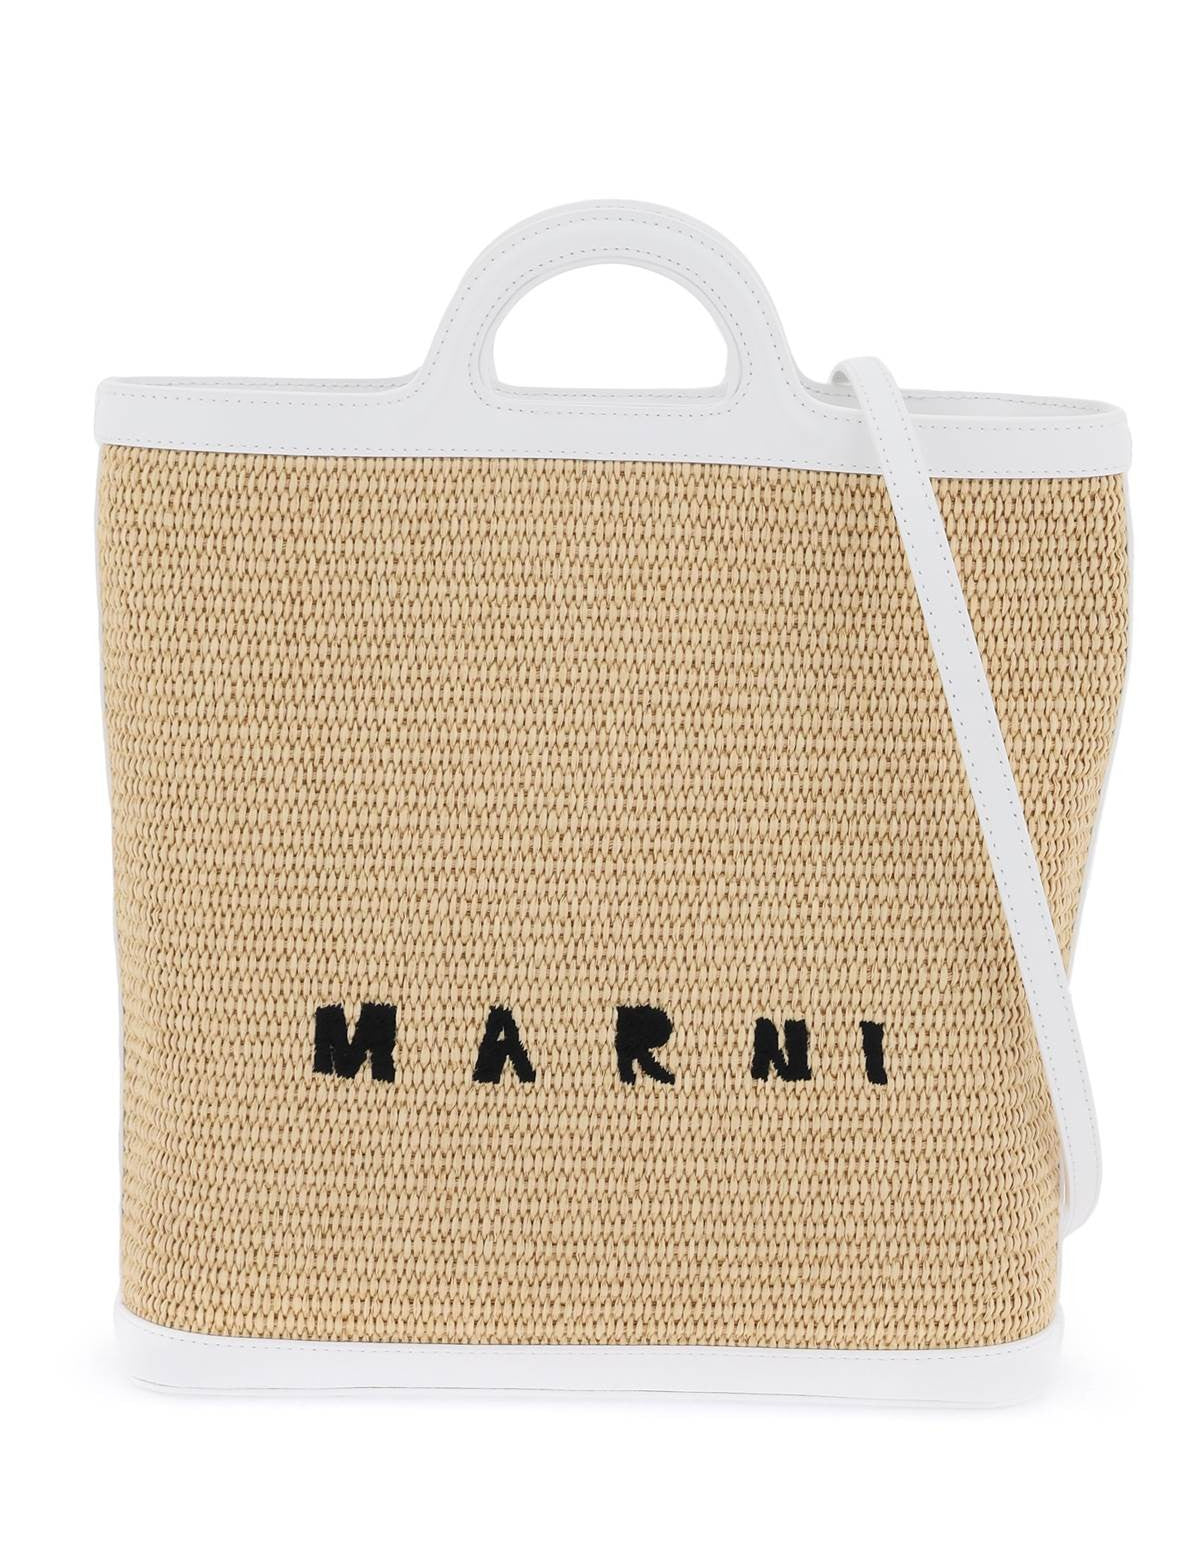 marni-tropicalia-handbag.jpg